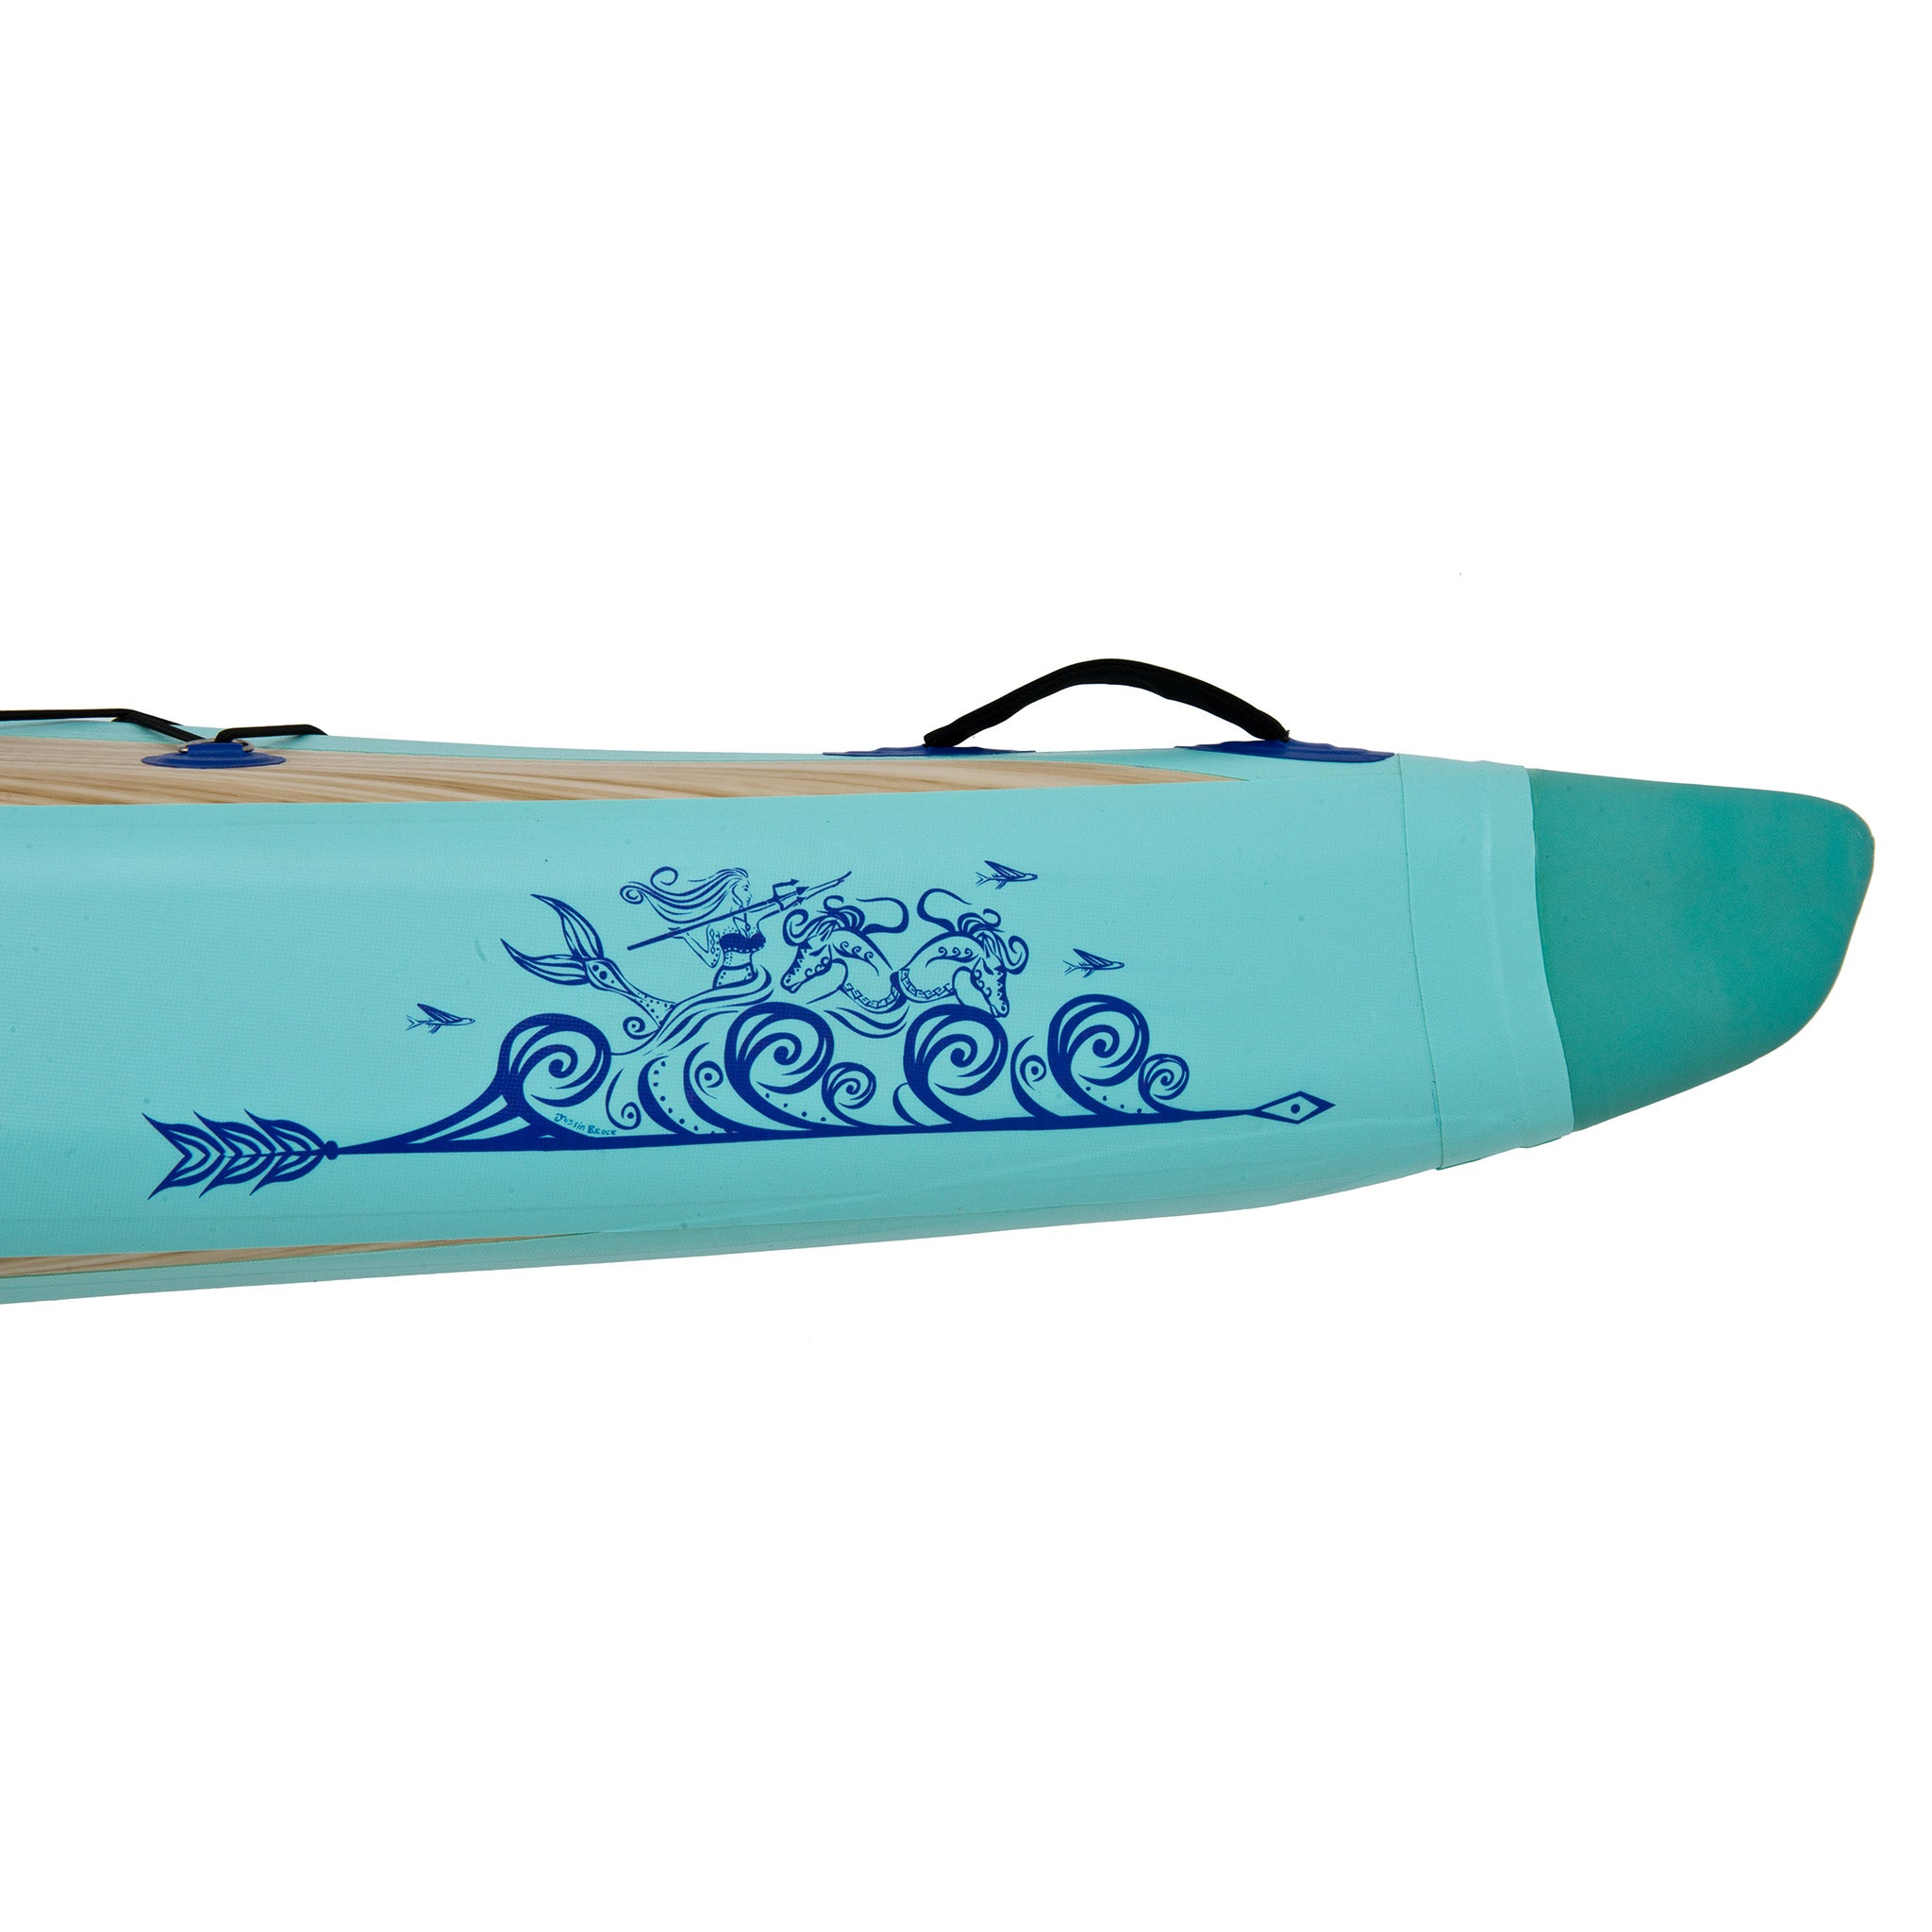 Inflatable Kayak | The Calypso Single Seat Inflatable Kayak | Canada Only